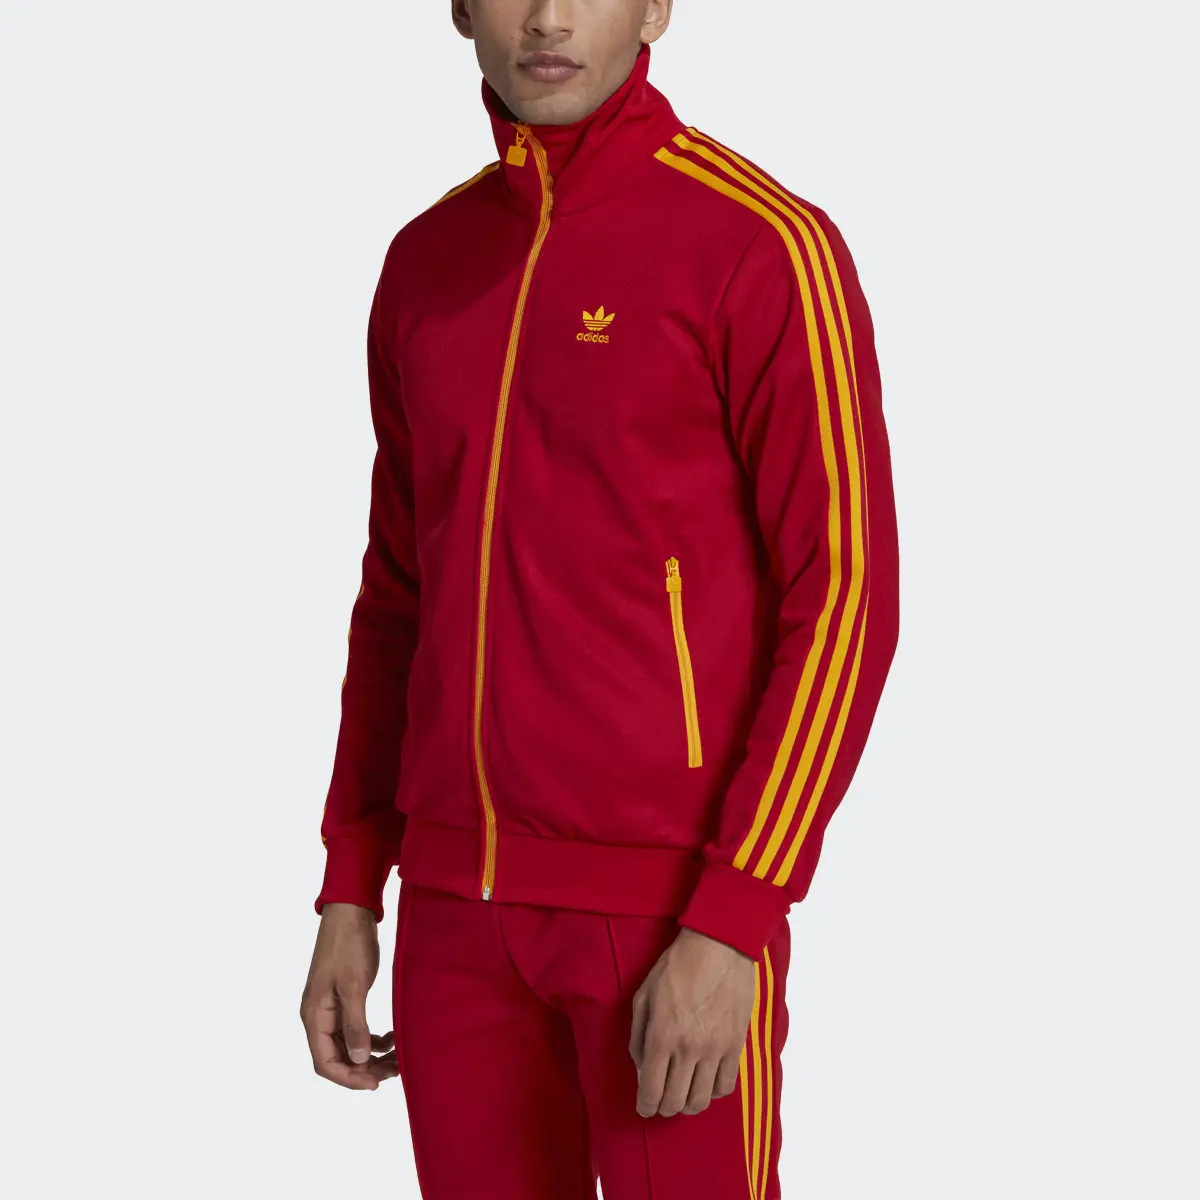 Adidas Track jacket Beckenbauer. 1